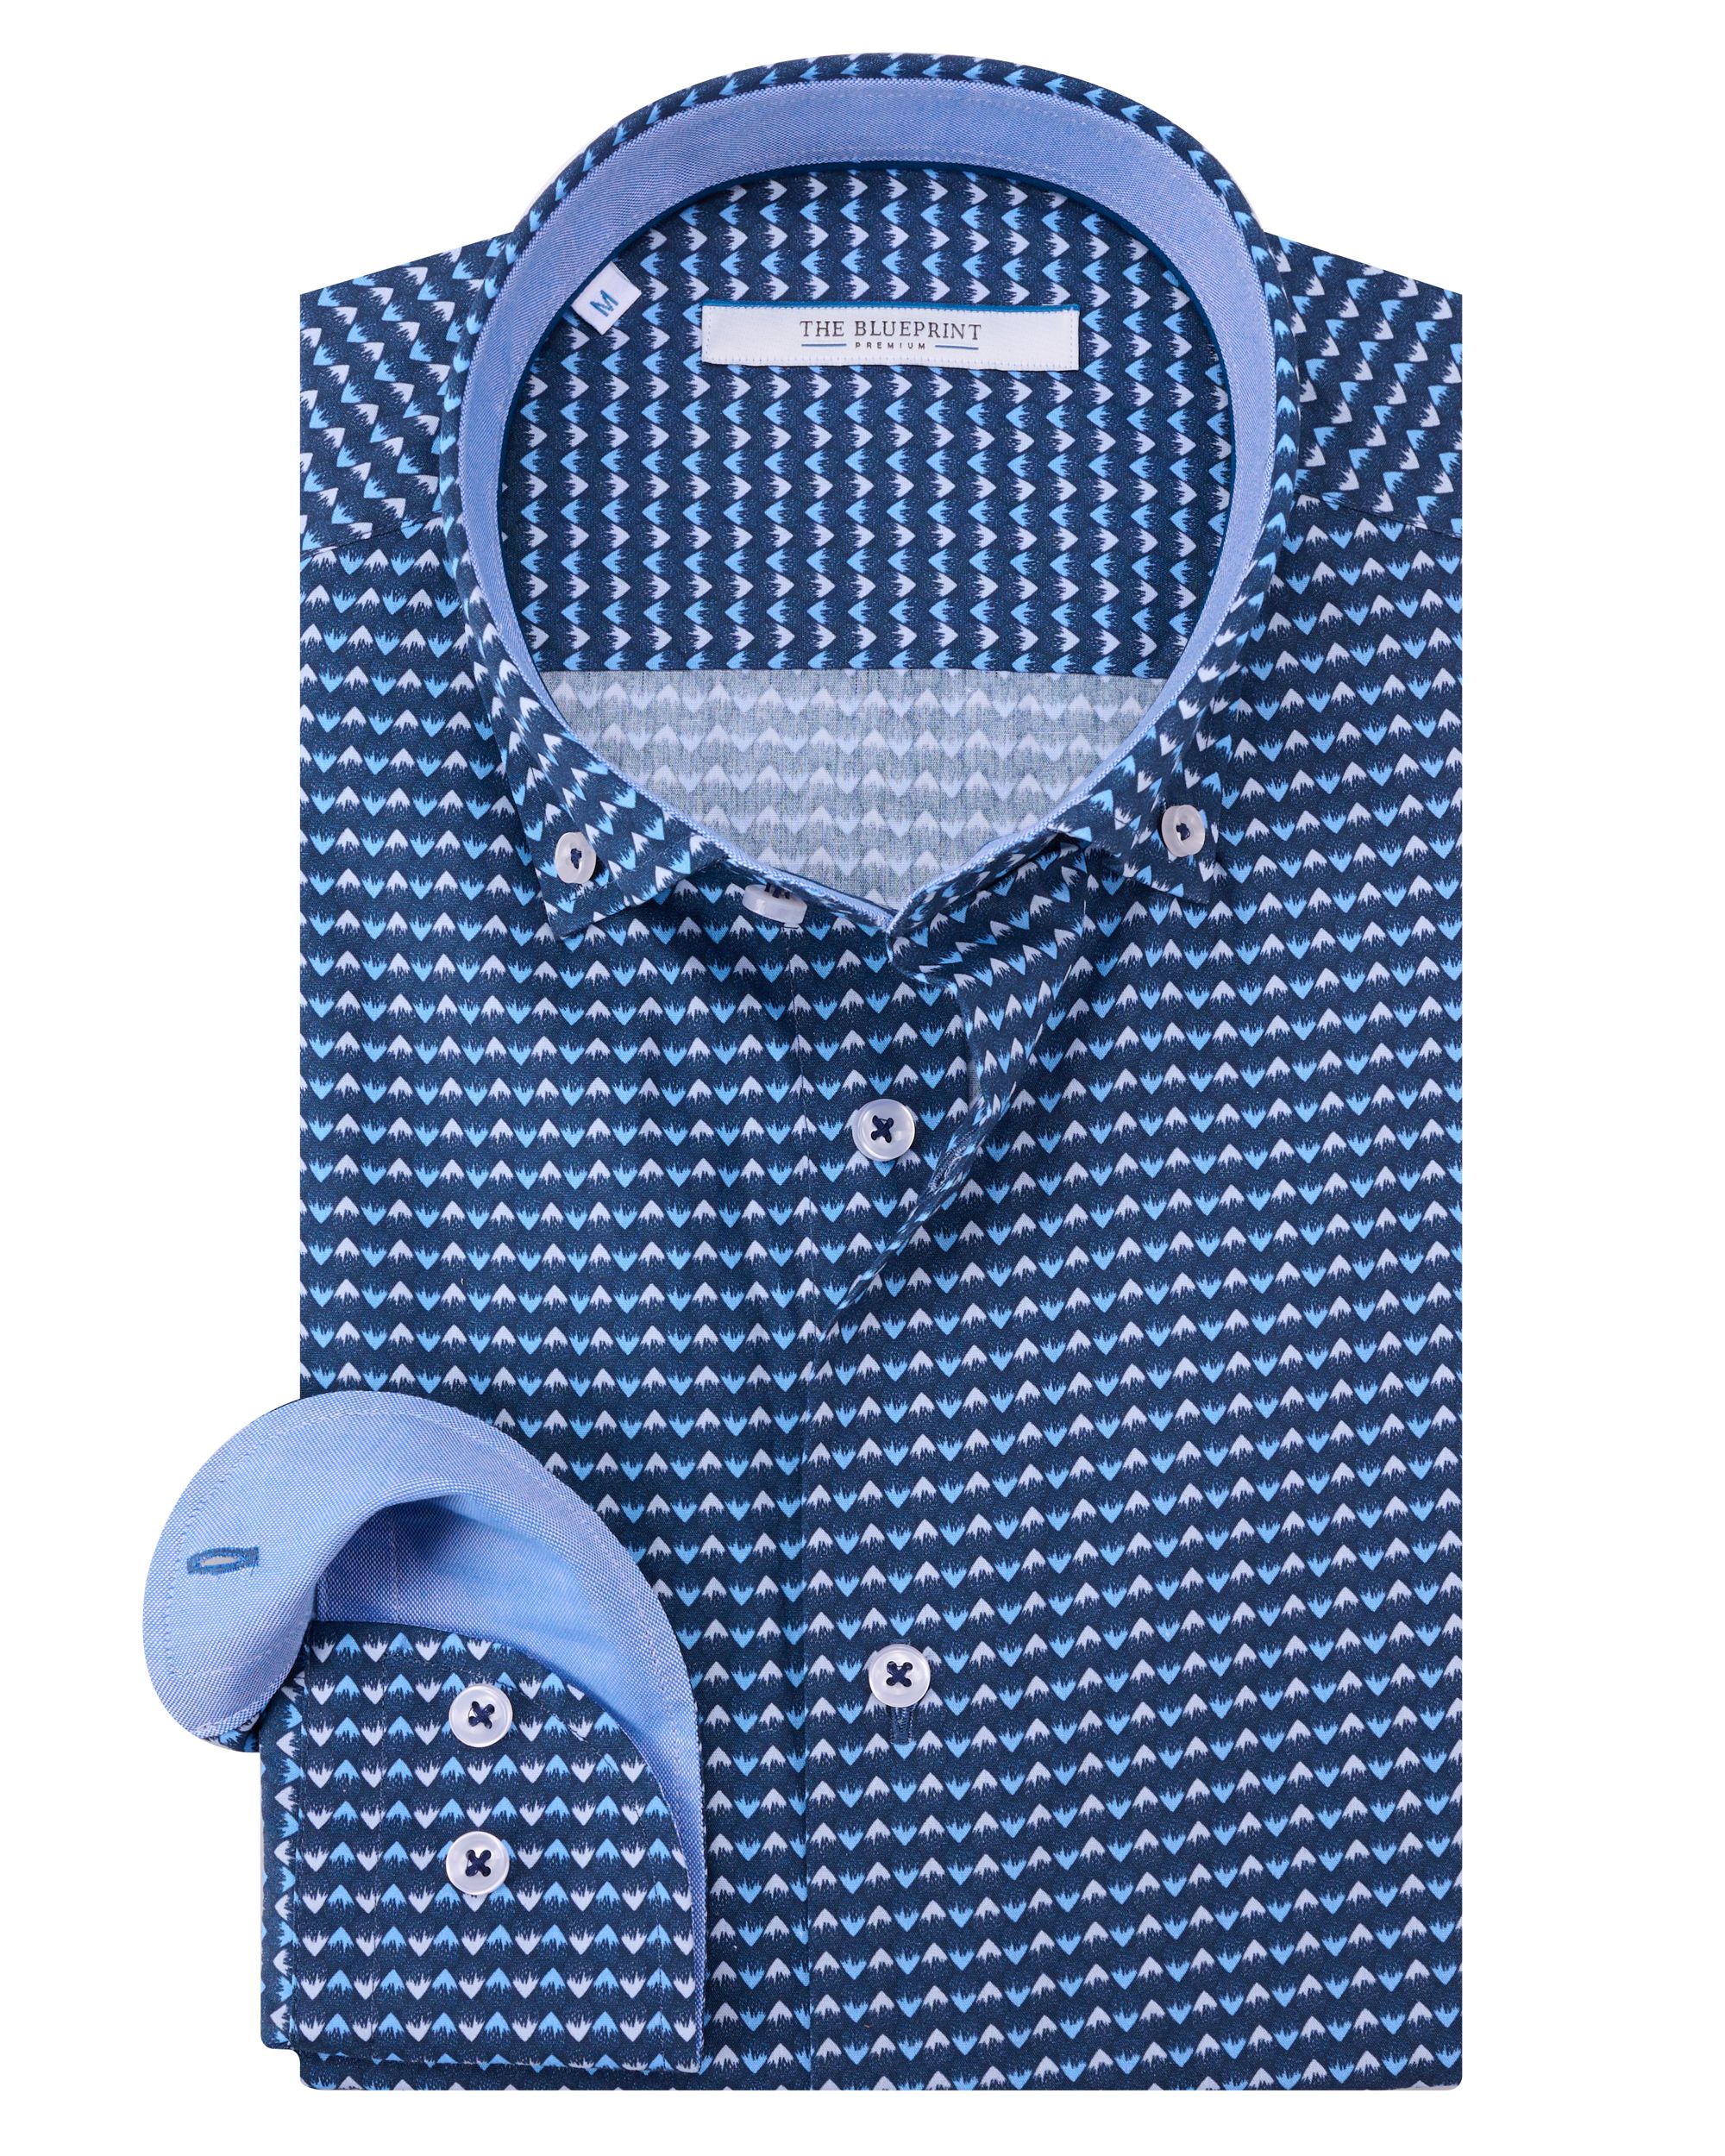 The BLUEPRINT Premium - Trendy overhemd LM Blauw dessin 086660-001-L